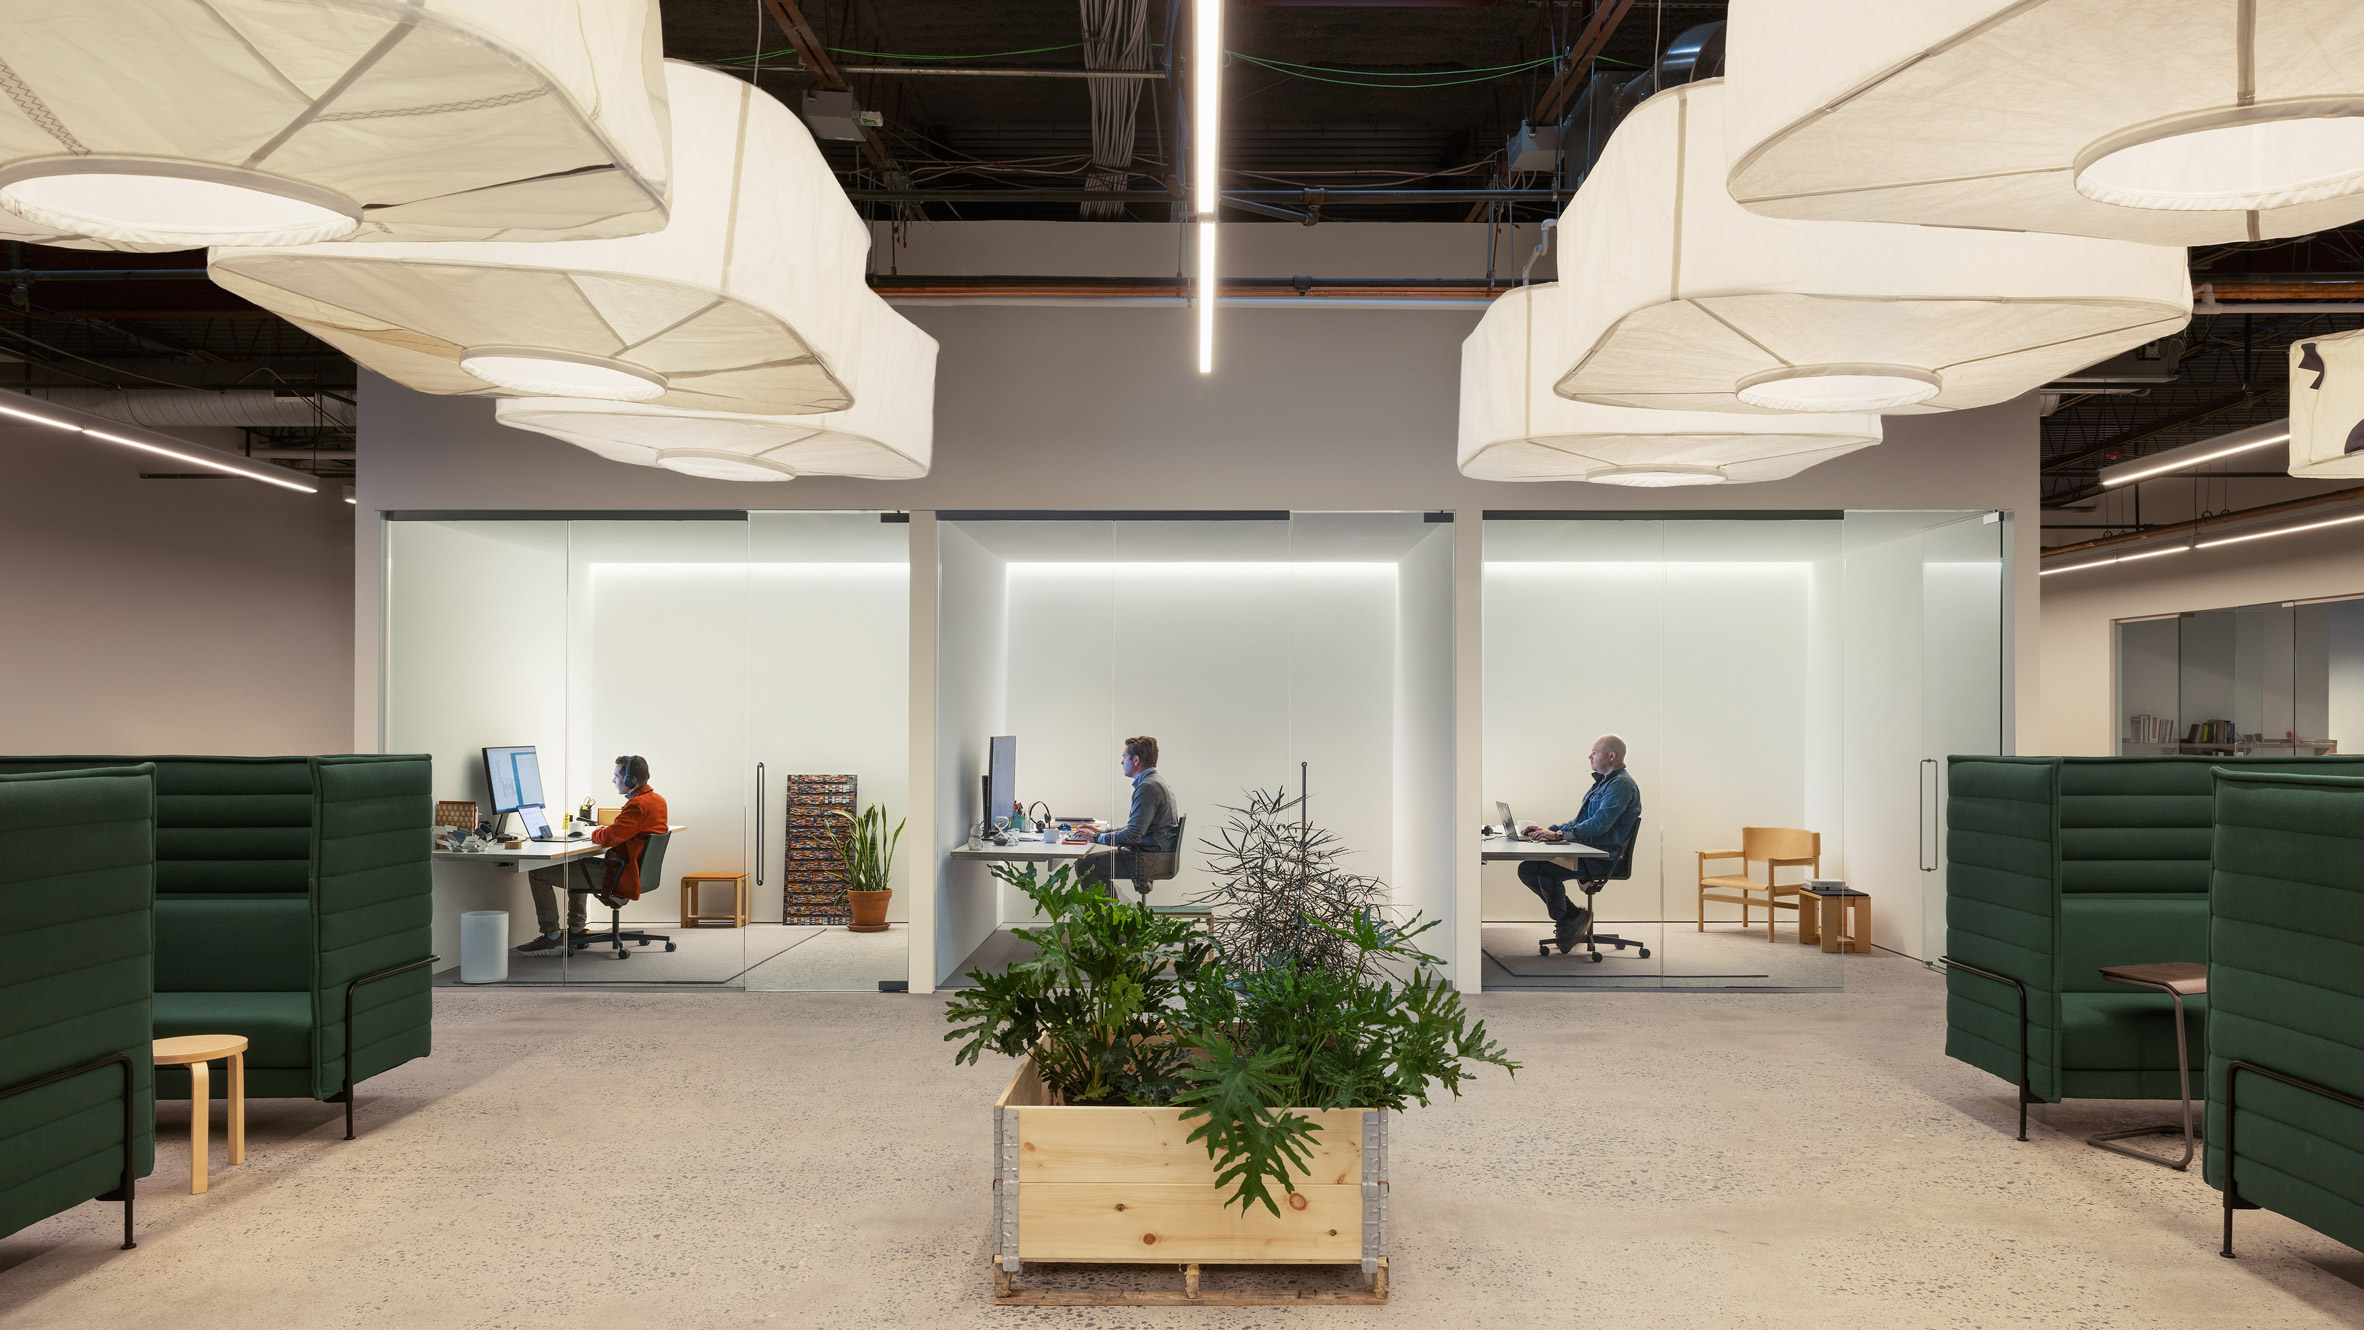 Neil Logan installs RBW headquarters at former IBM campus in New York